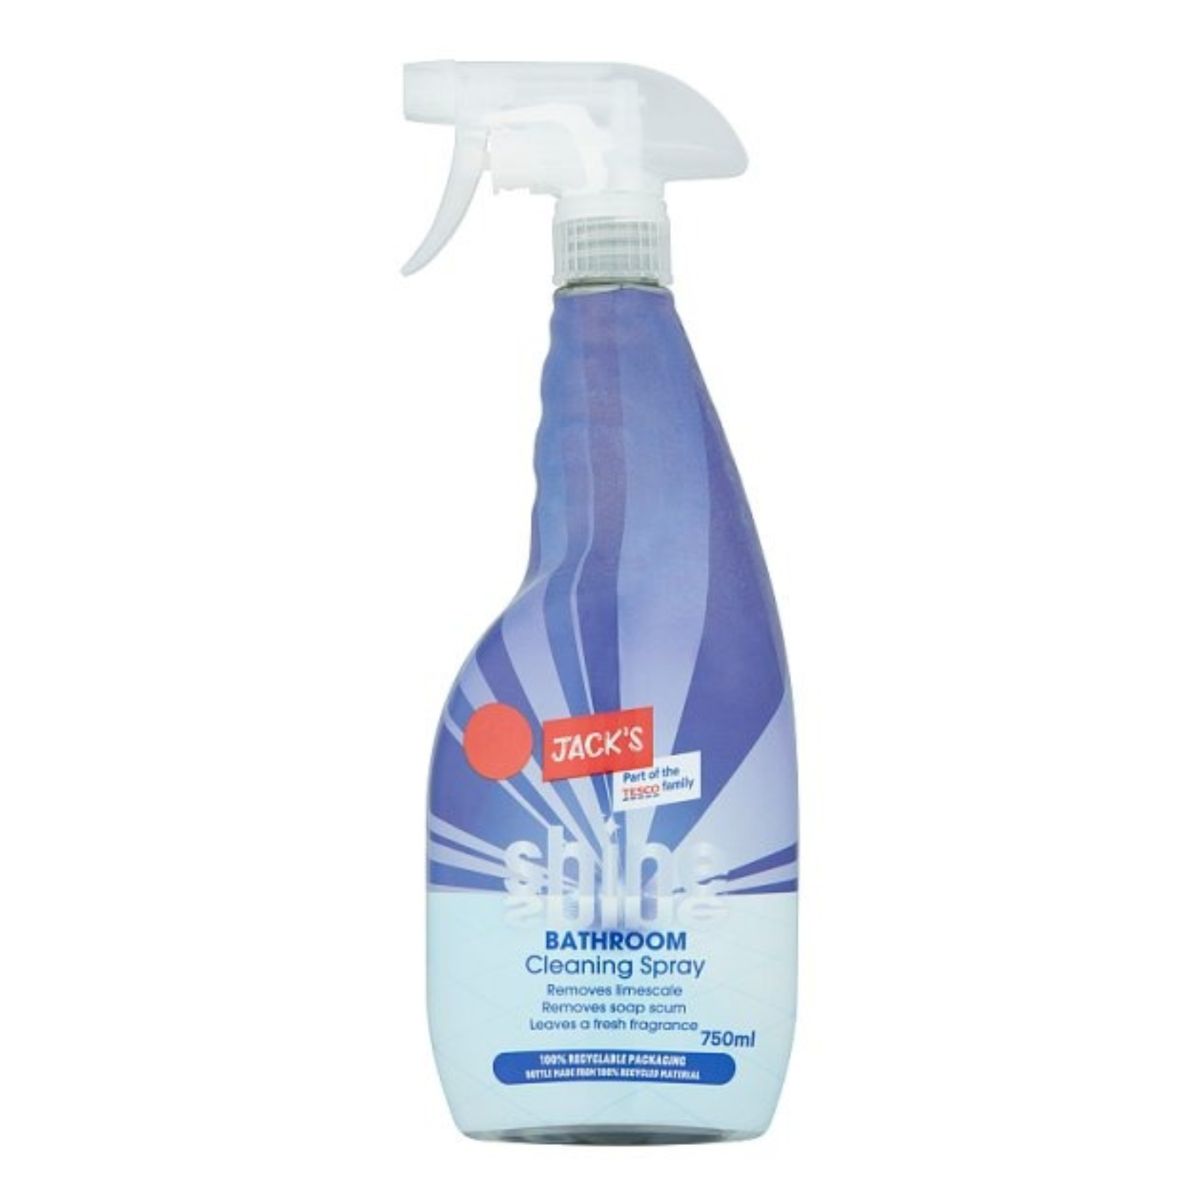 A Jacks - Shine Bathroom Cleaning Spray - 750ml with a white sprayer.